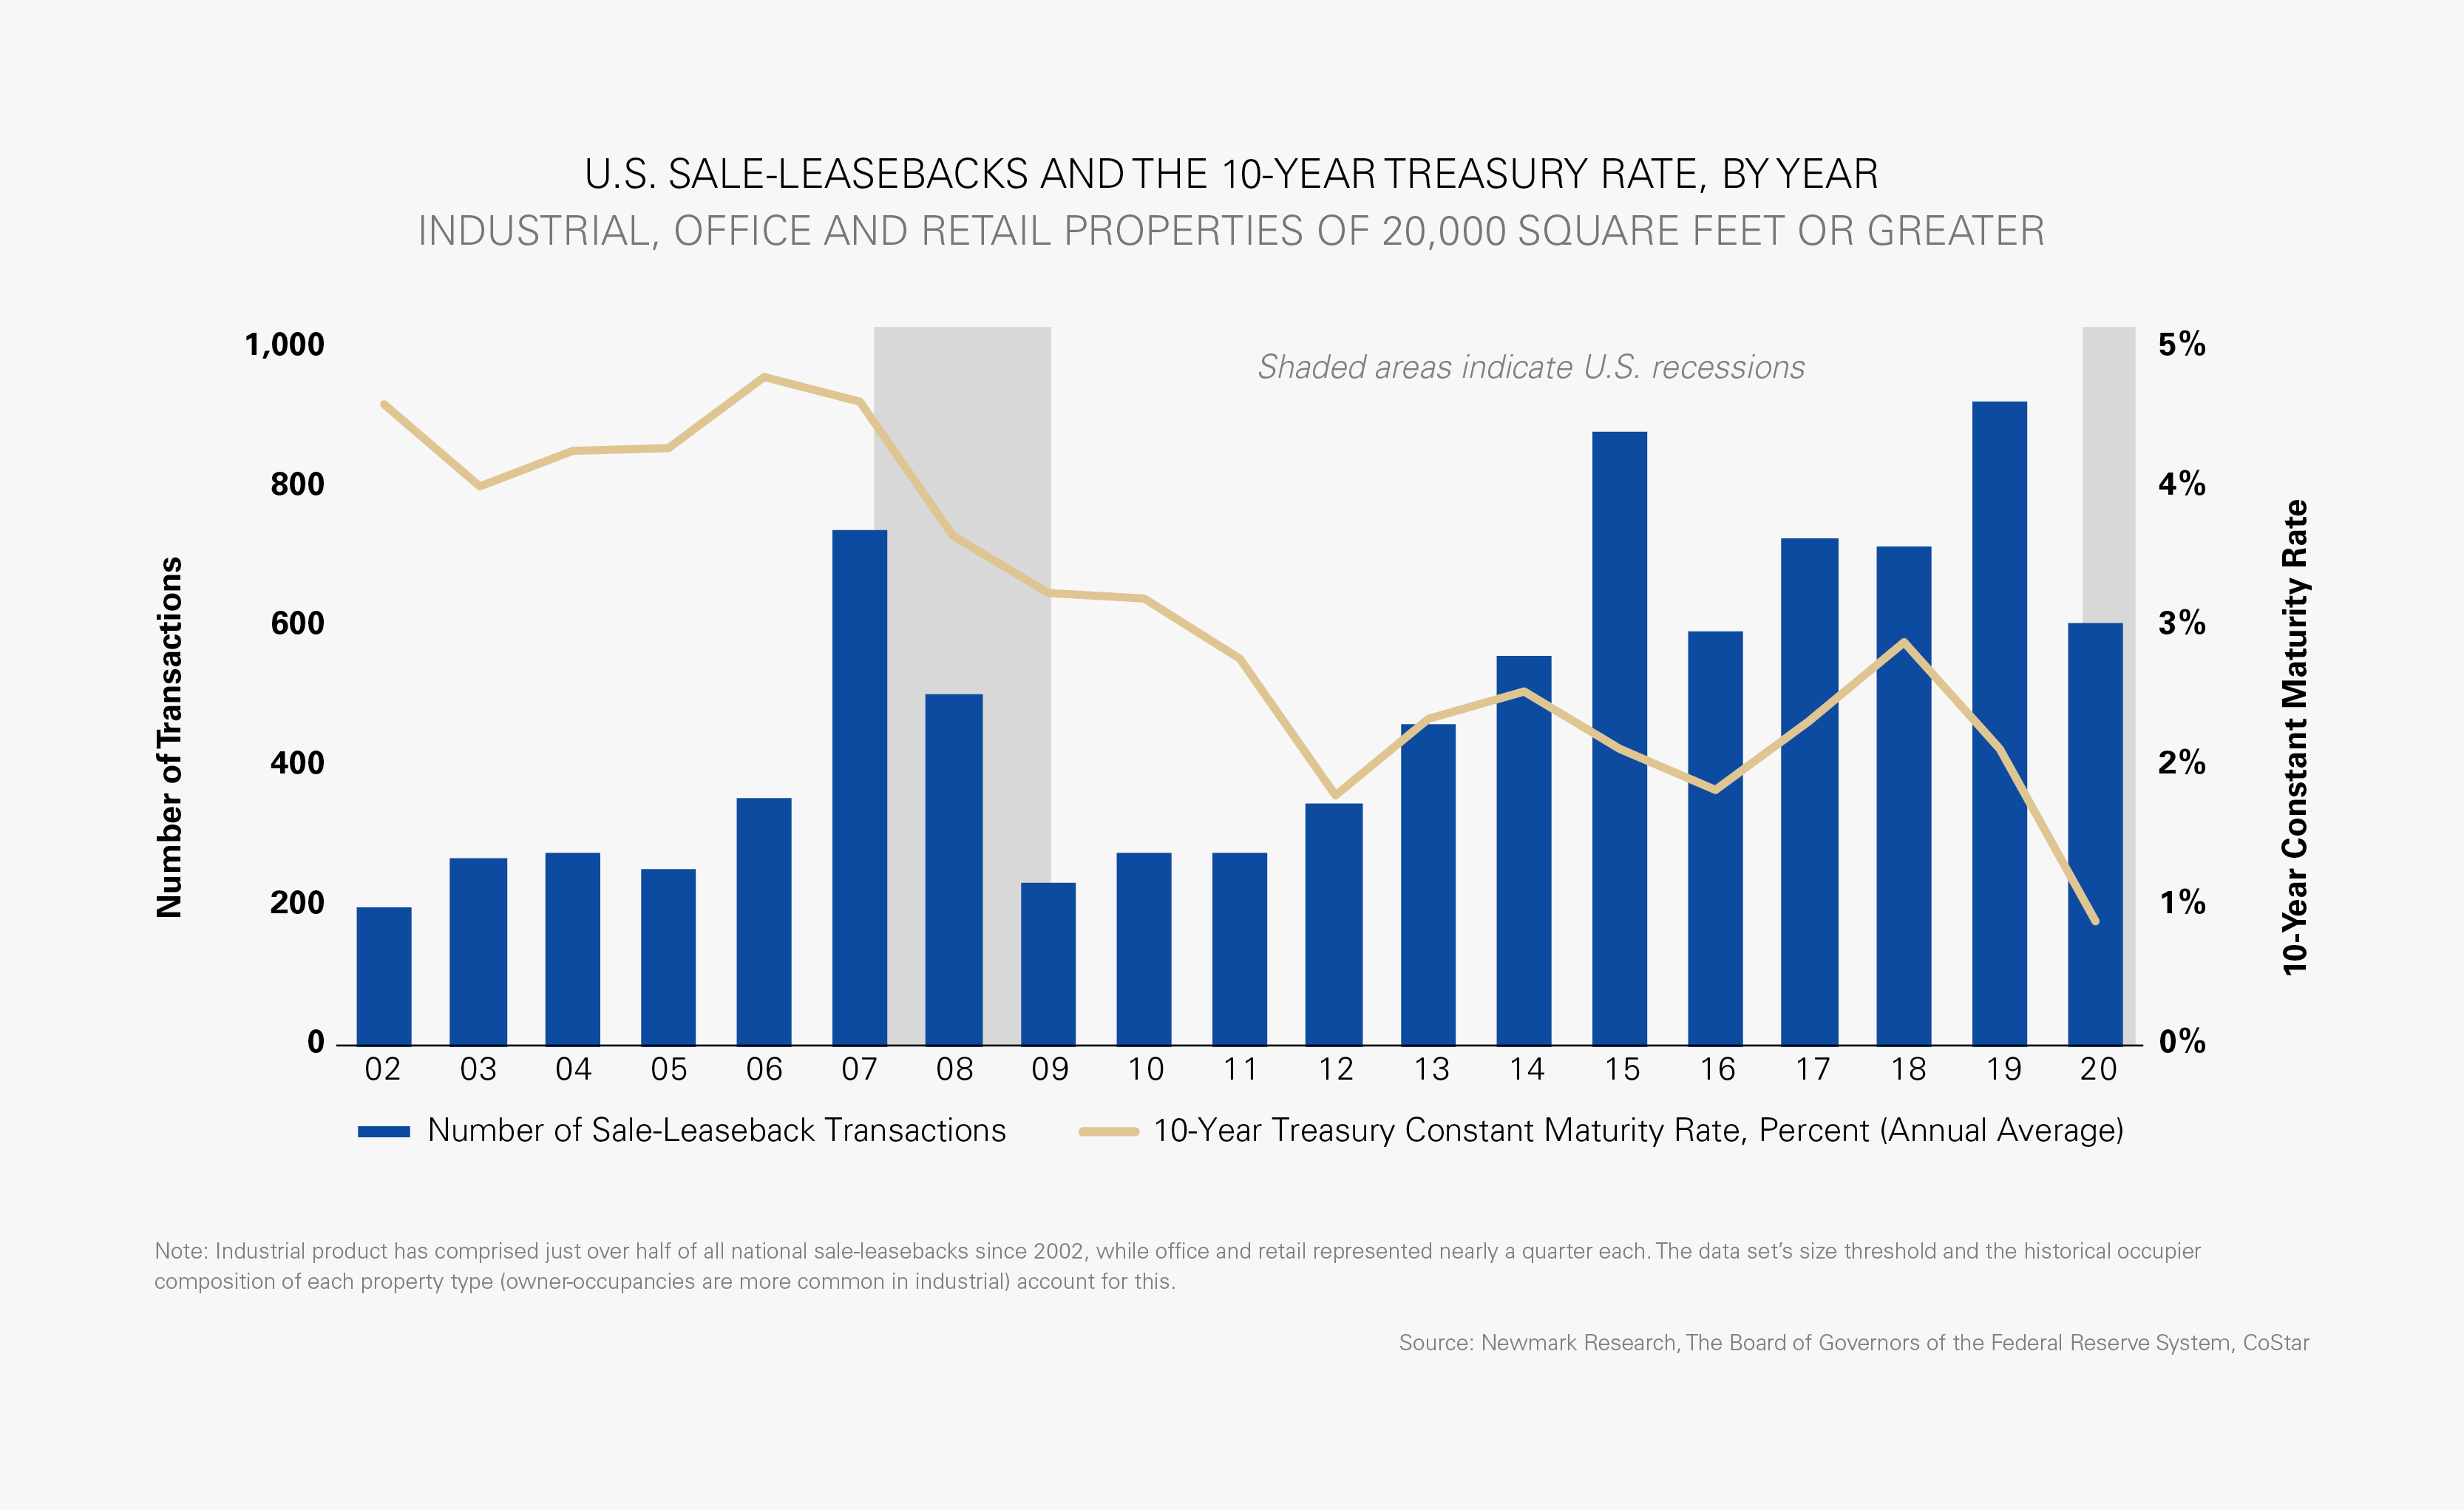 U.S. SALE-LEASEBACKS AND THE 10-YEAR TREASURY RATE, BY YEAR